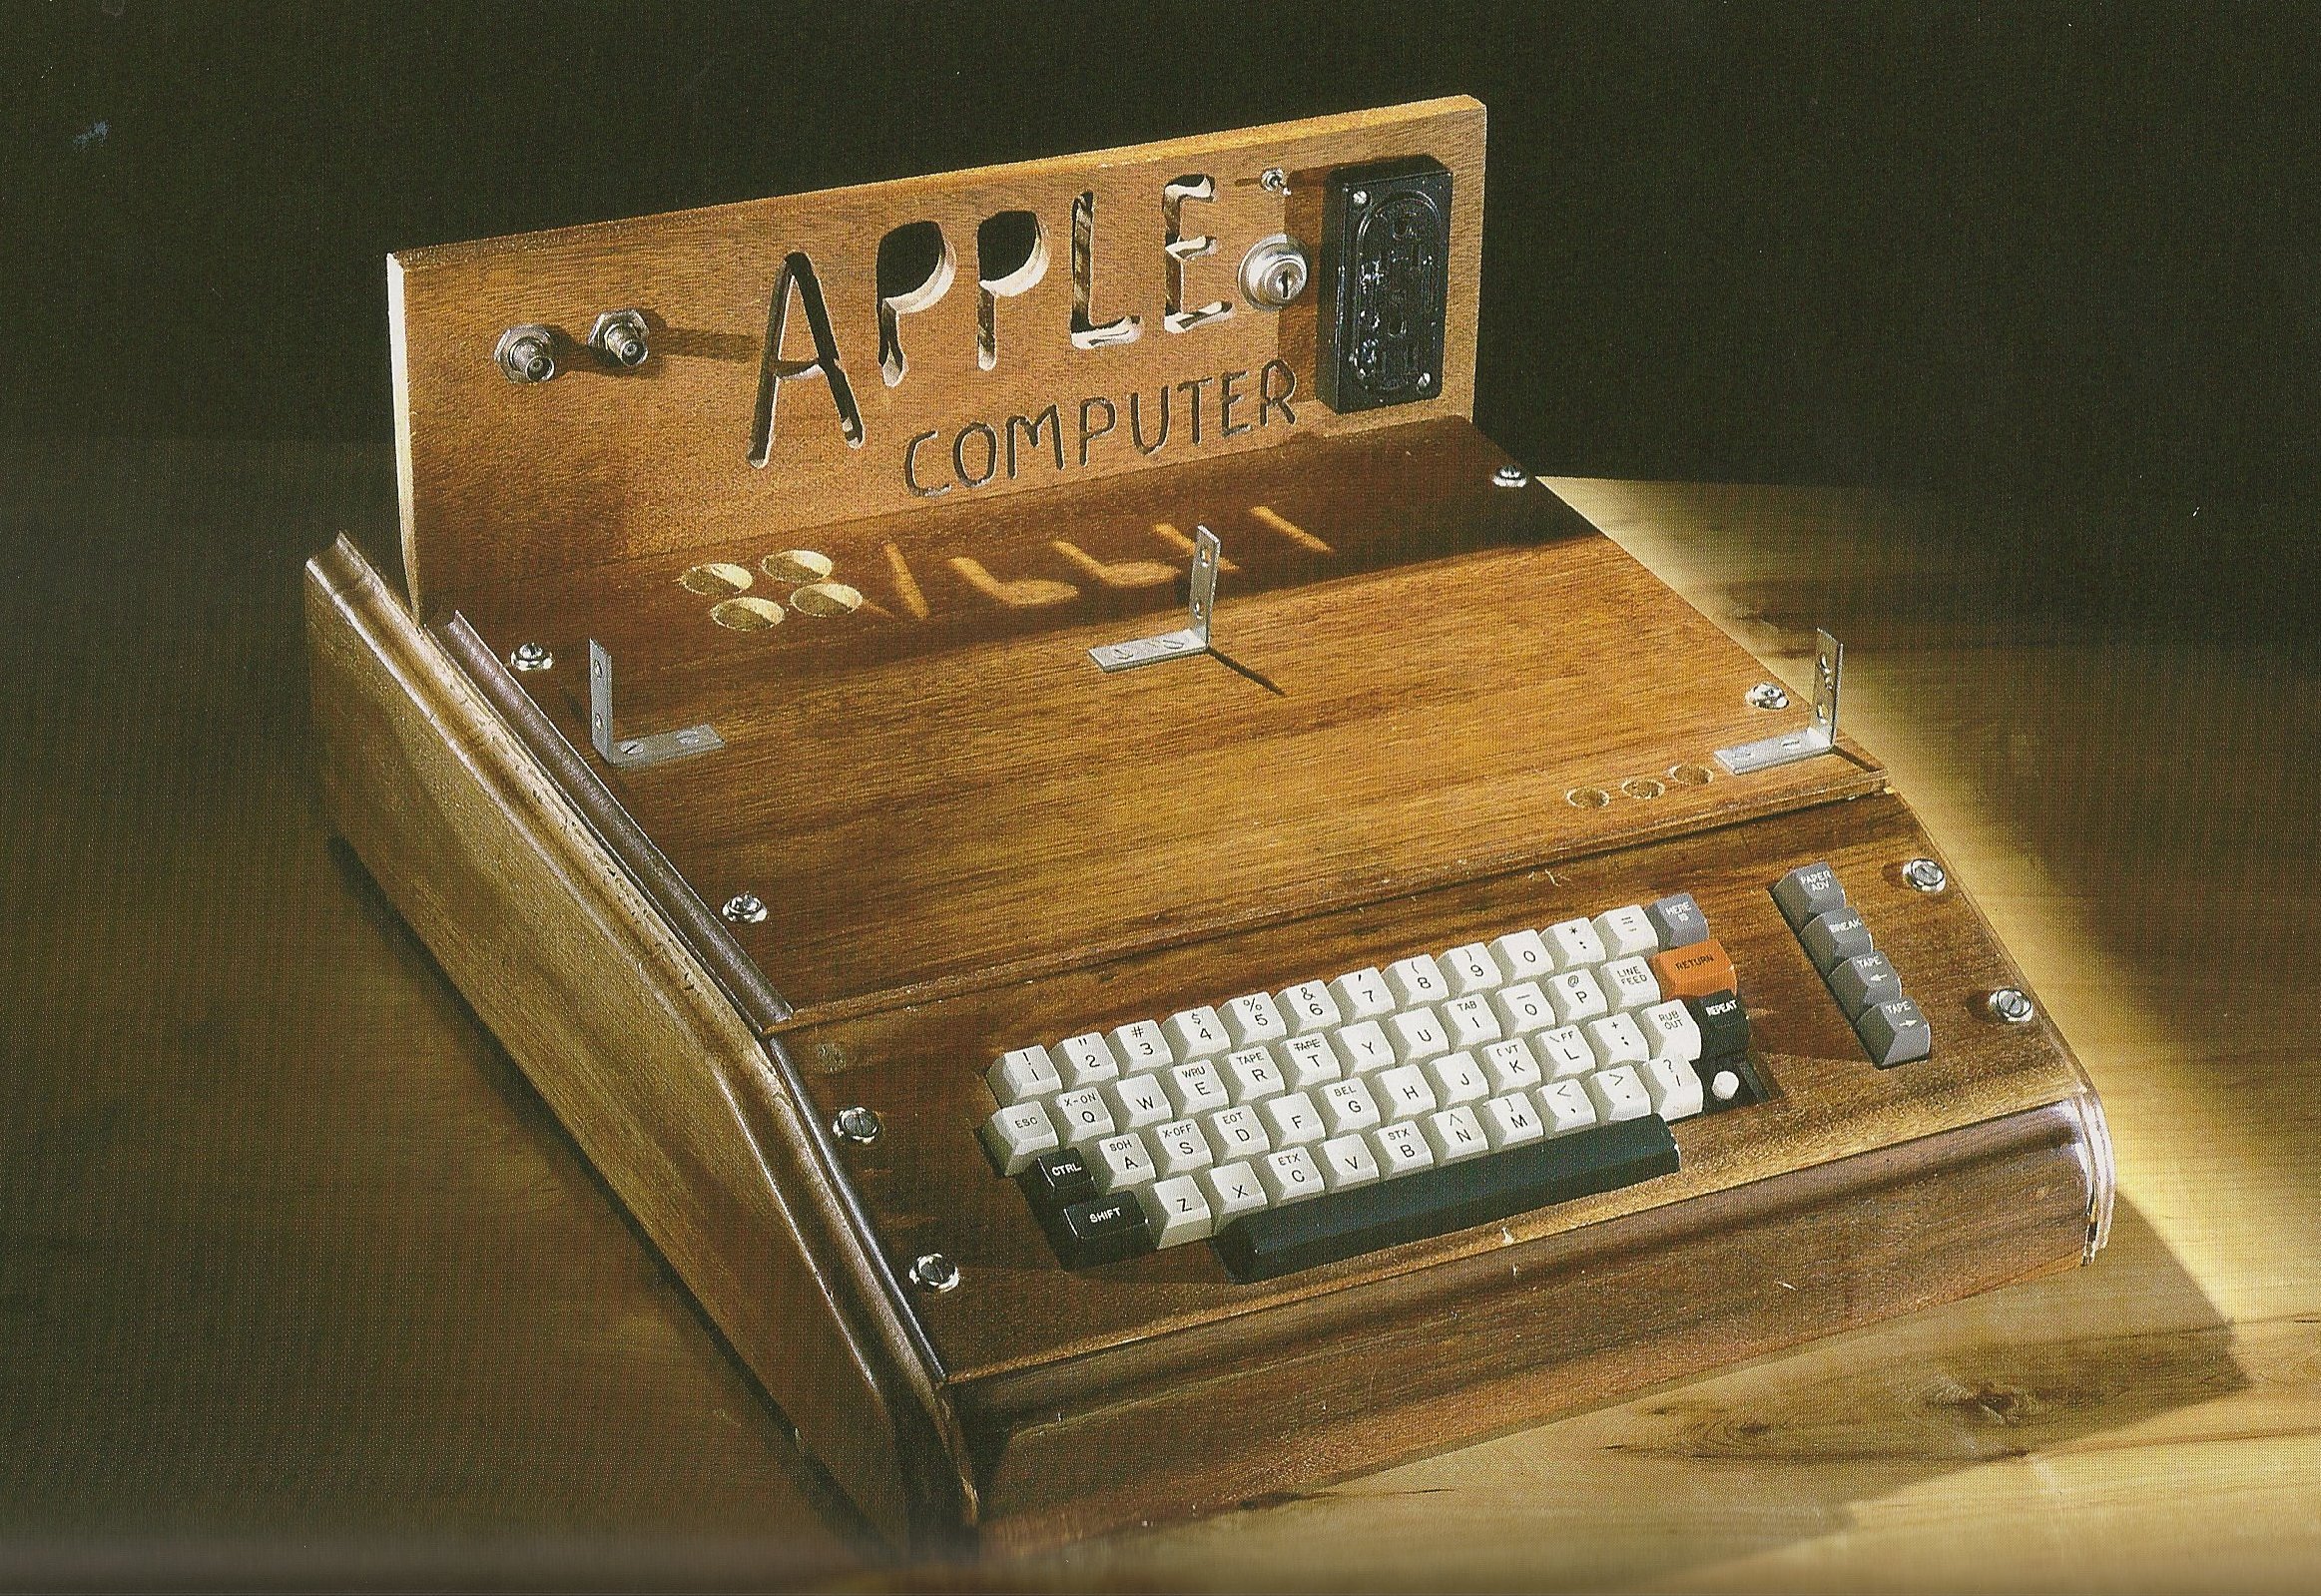 First apple. Компьютер Эппл 1976. Первый компьютер Эппл 1. Стив Джобс компьютер Apple 1. Первый компьютер Apple 1976.